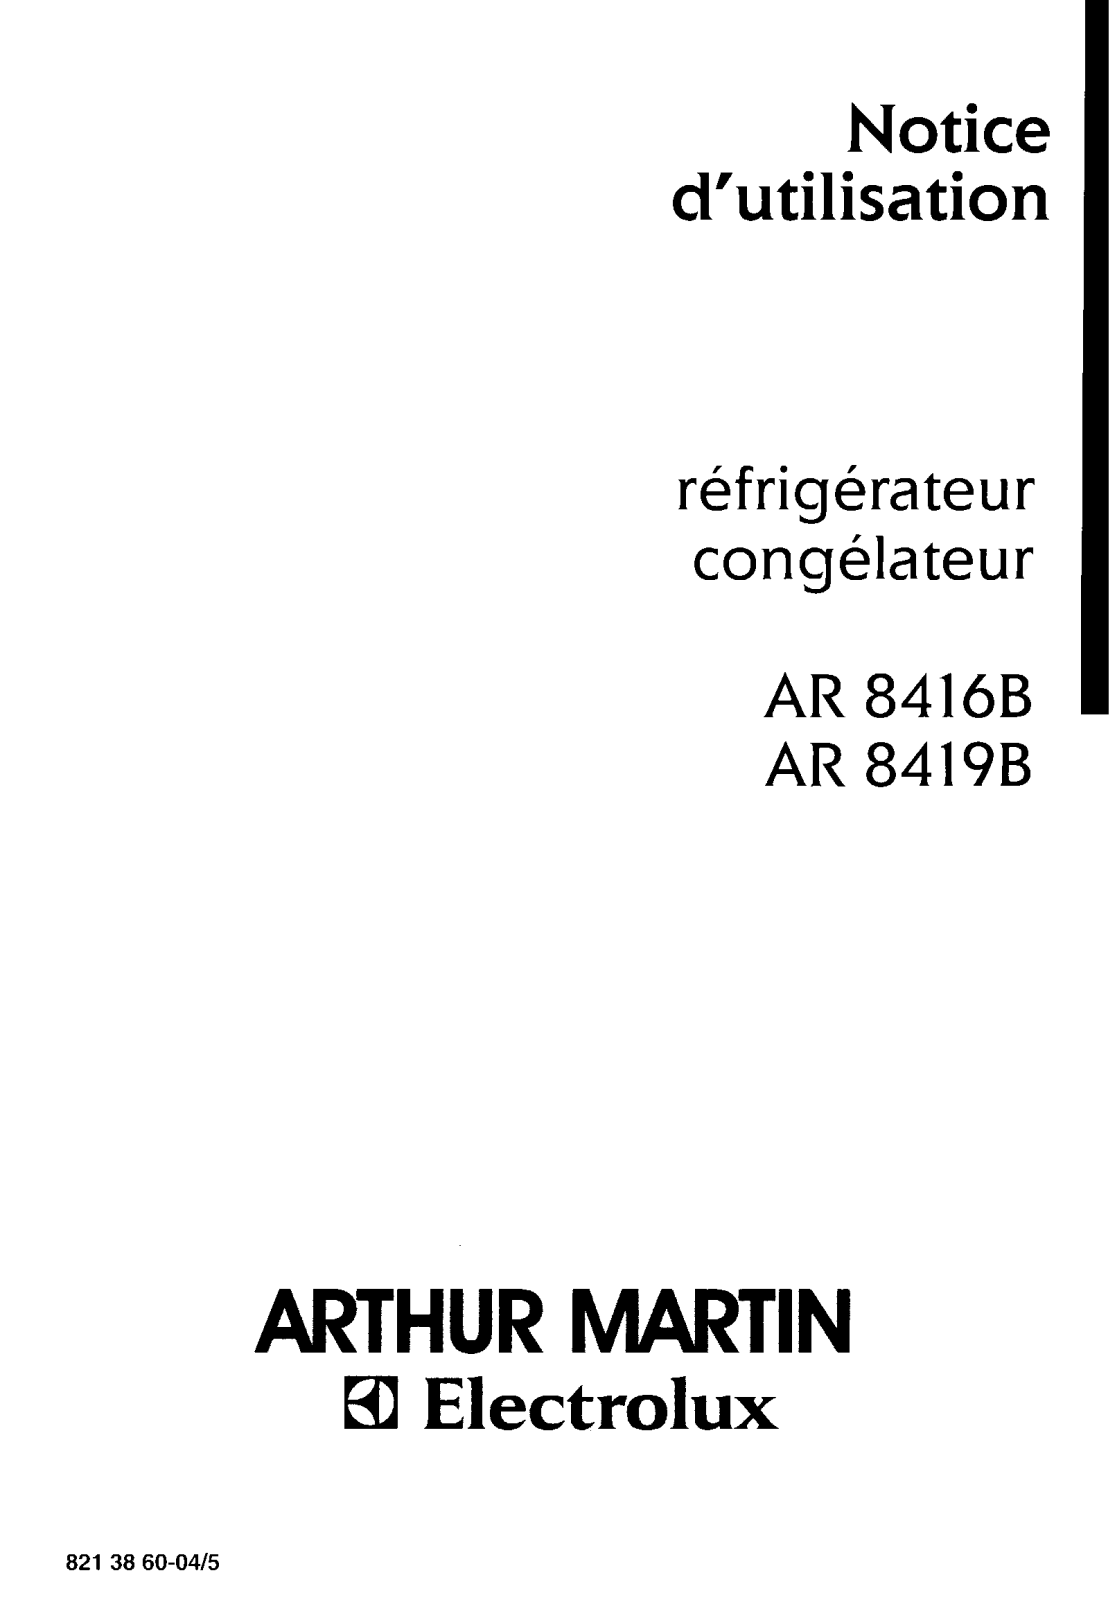 Arthur martin AR8419B User Manual